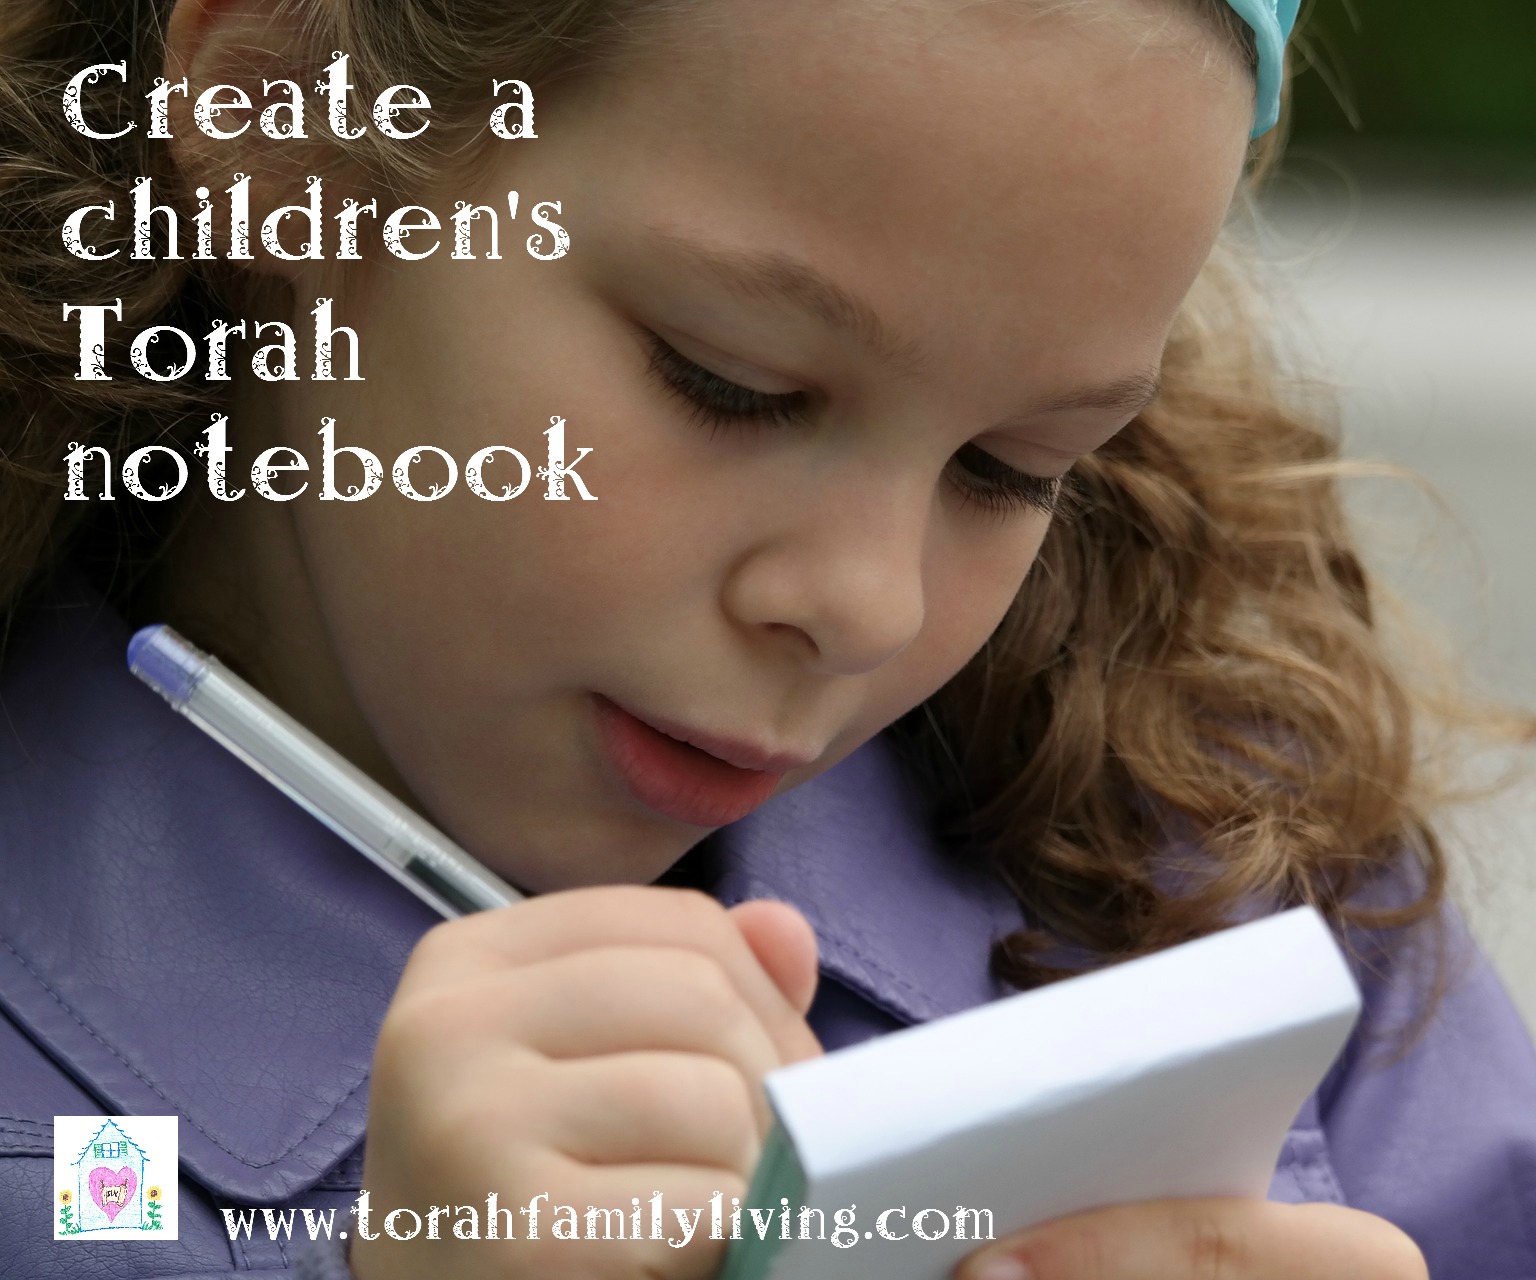 Create a children’s Torah notebook